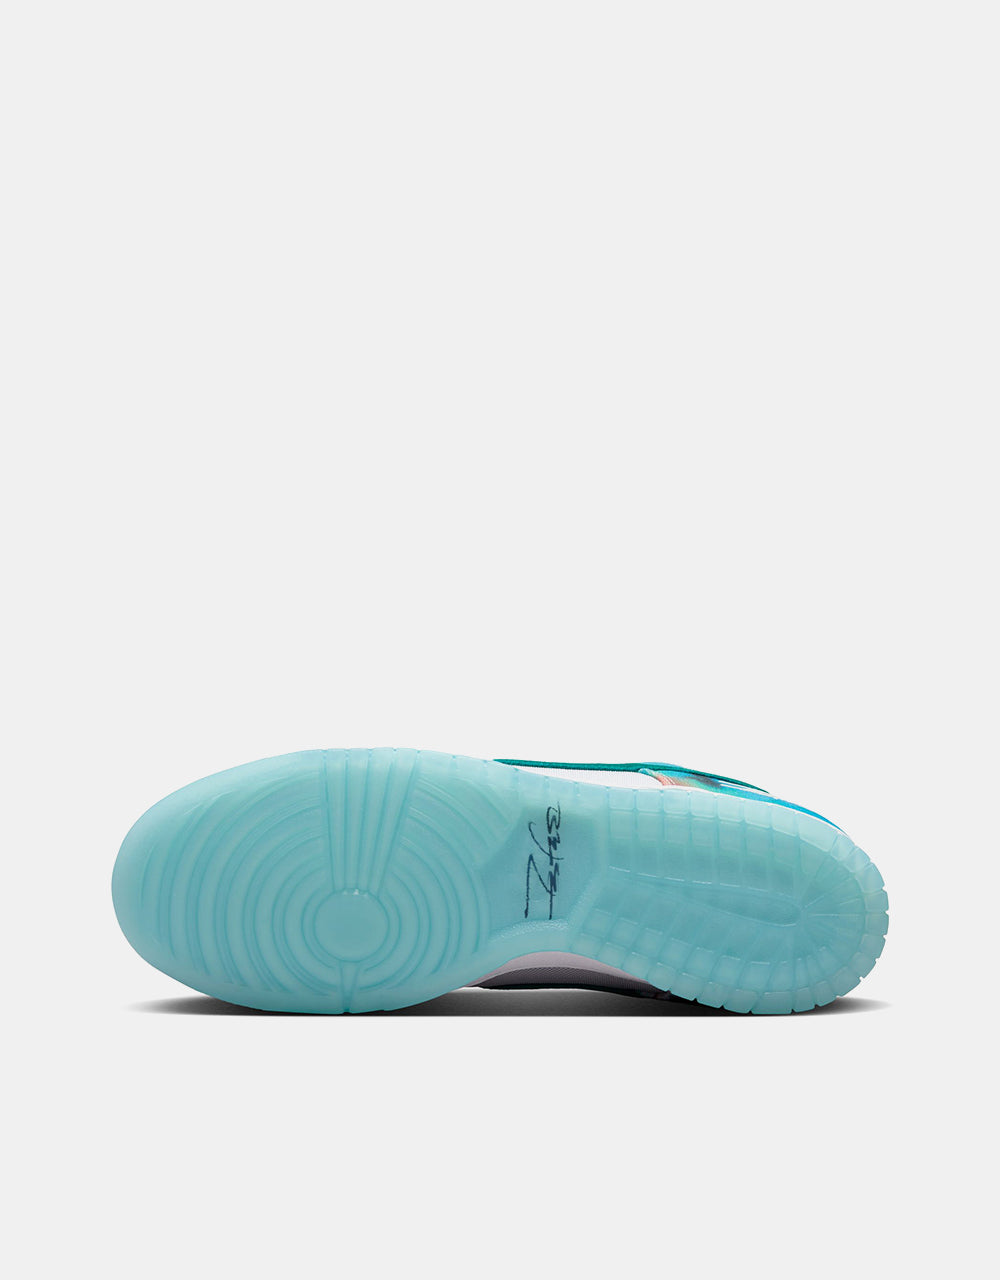 Nike SB 'Futura' Dunk Low OG QS Skate Shoes - Bleached Aqua/Geode Teal-White